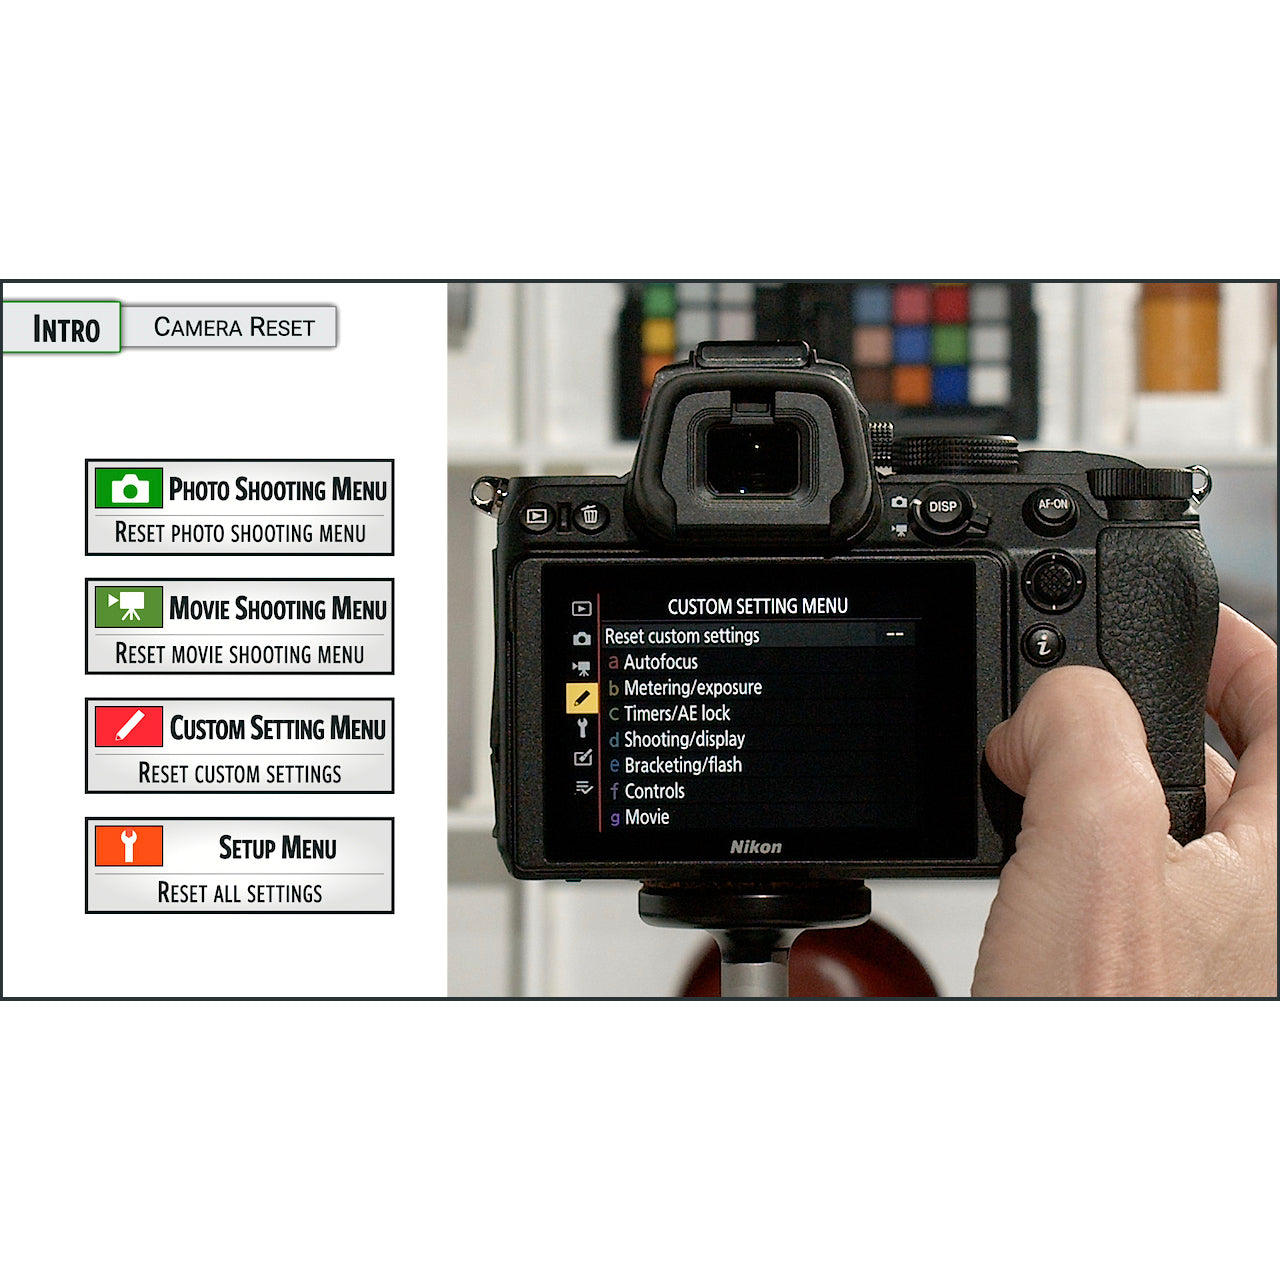 Nikon Z5: Complete Camera Guide